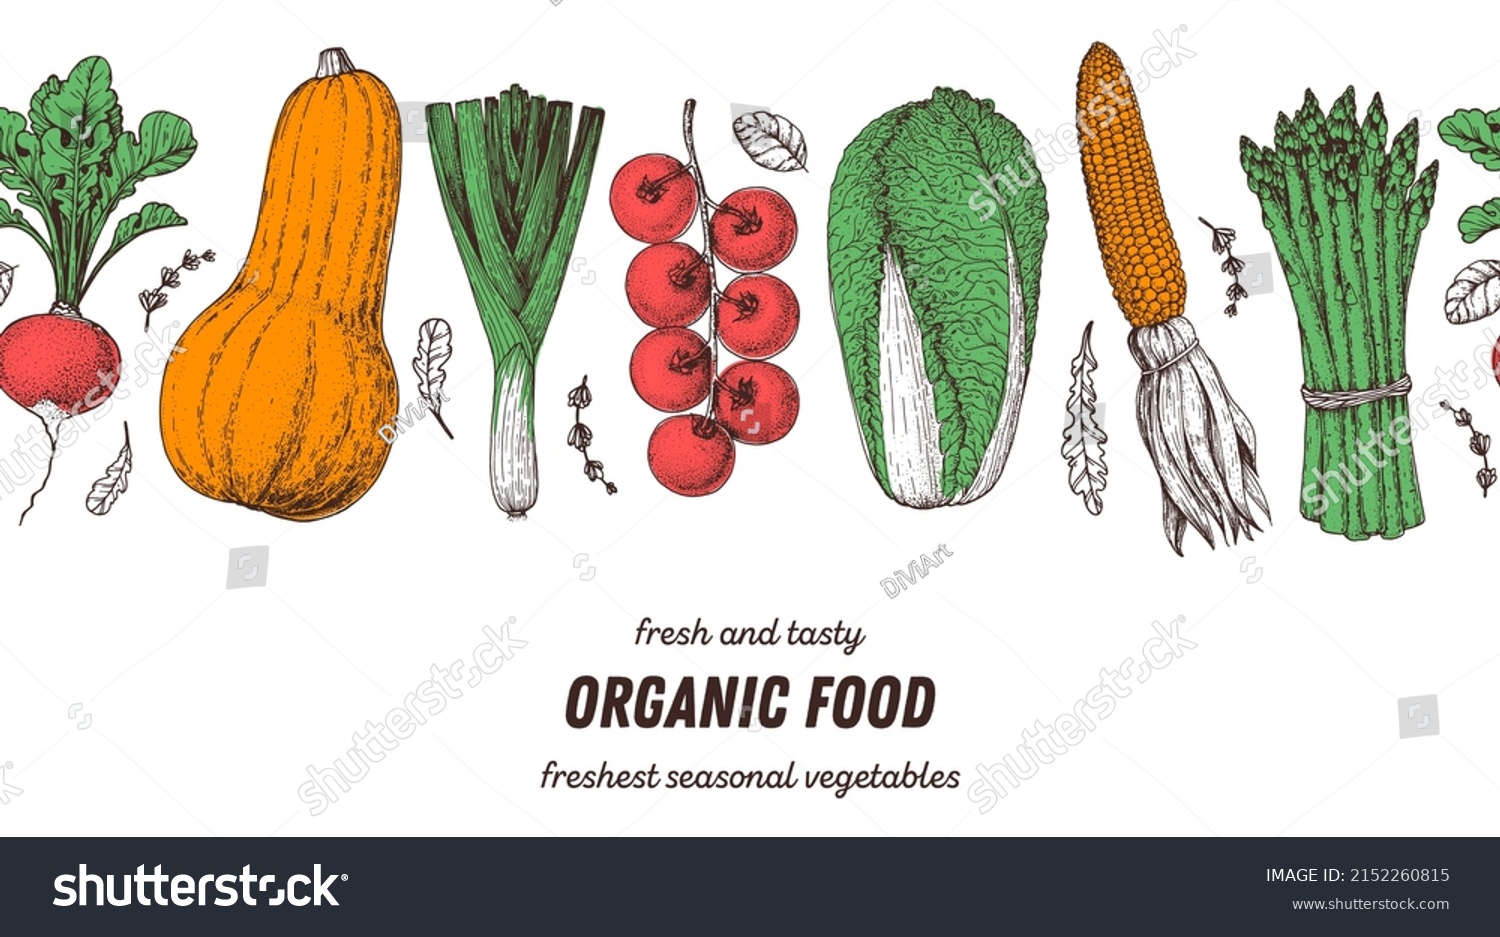 Vegetables hand drawn illustration. Top view frame. Vintage hand drawn sketch. Organic food poster. Good nutrition, healthy food. Vector illustration. Asparagus, cabbage, corn, tomato, leek, radish. #2152260815